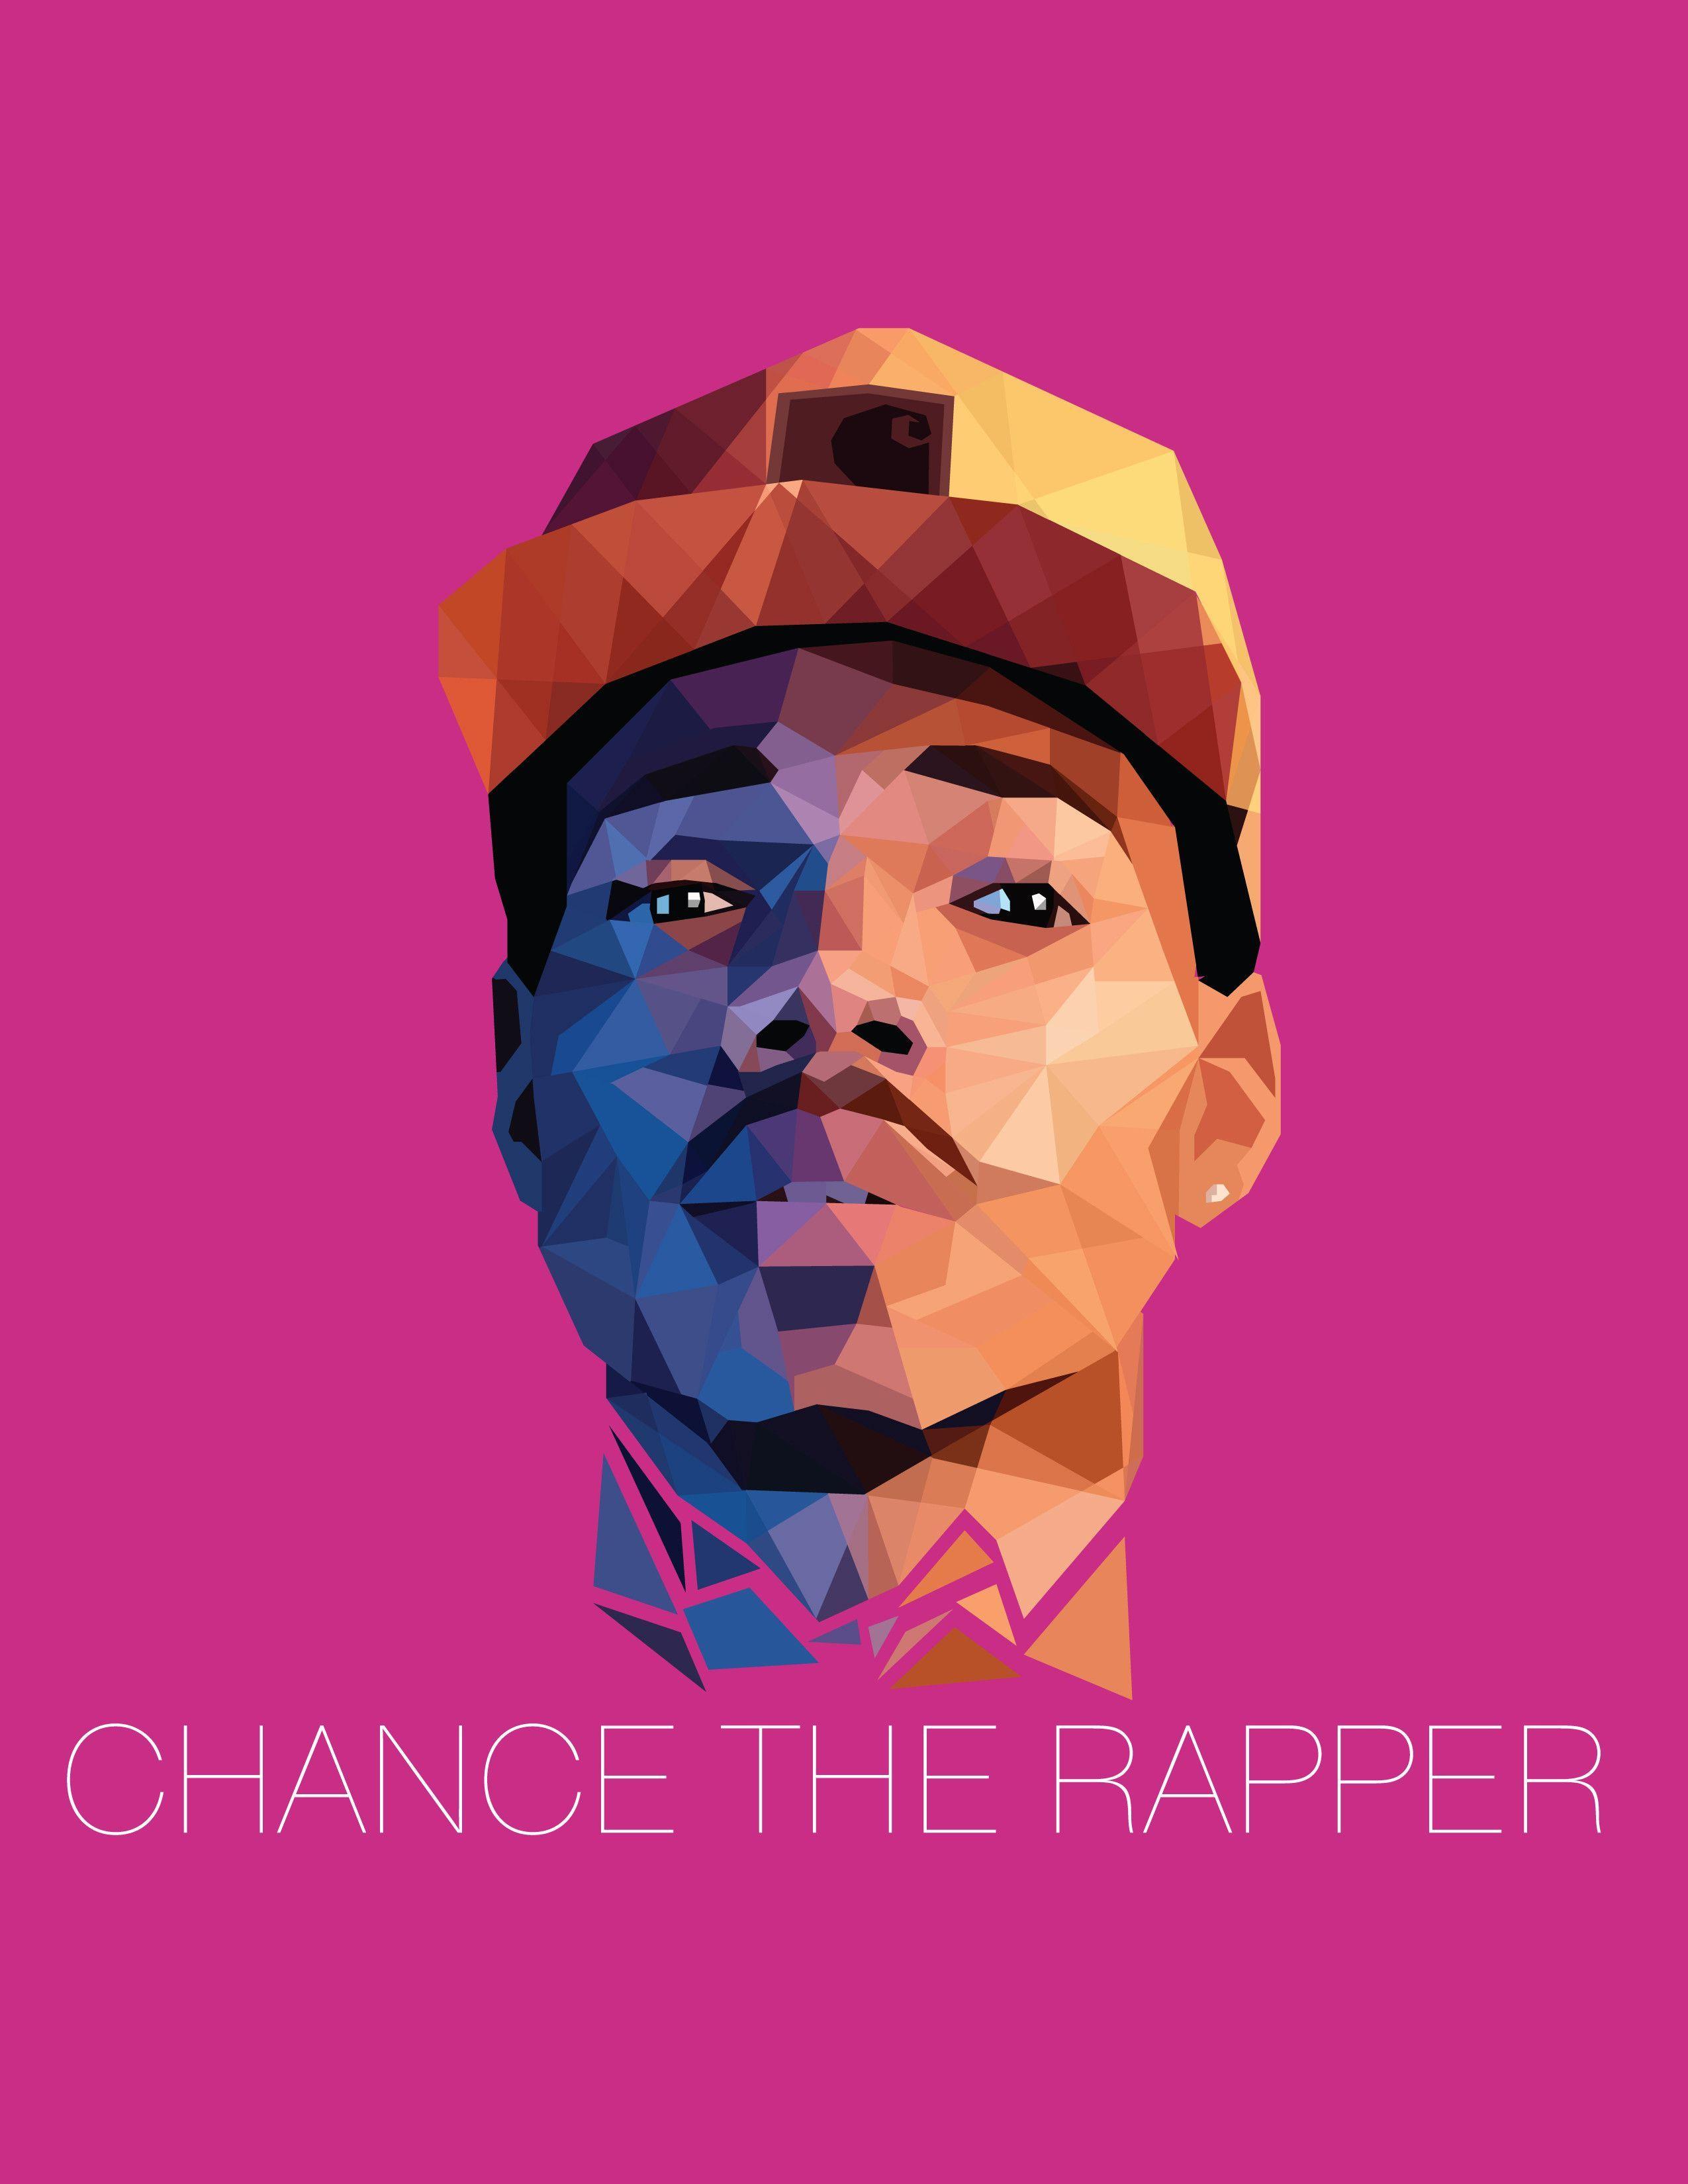 Chance the Rapper. Chance the rapper wallpaper, Chance the rapper